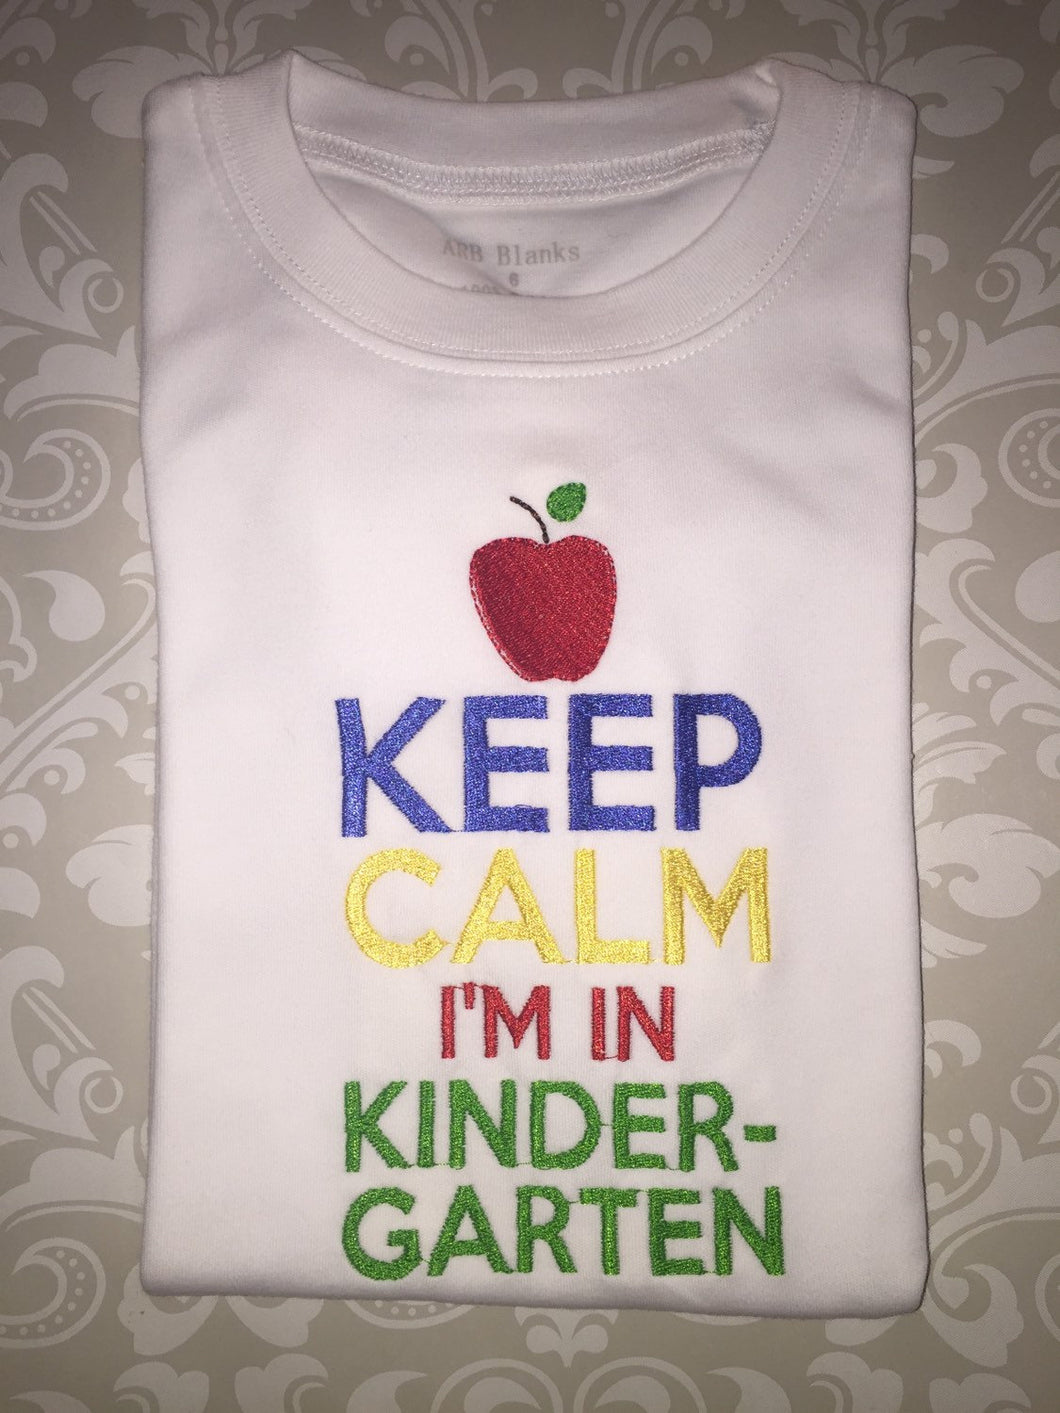 Keep Calm I'm in Kindergarten tee